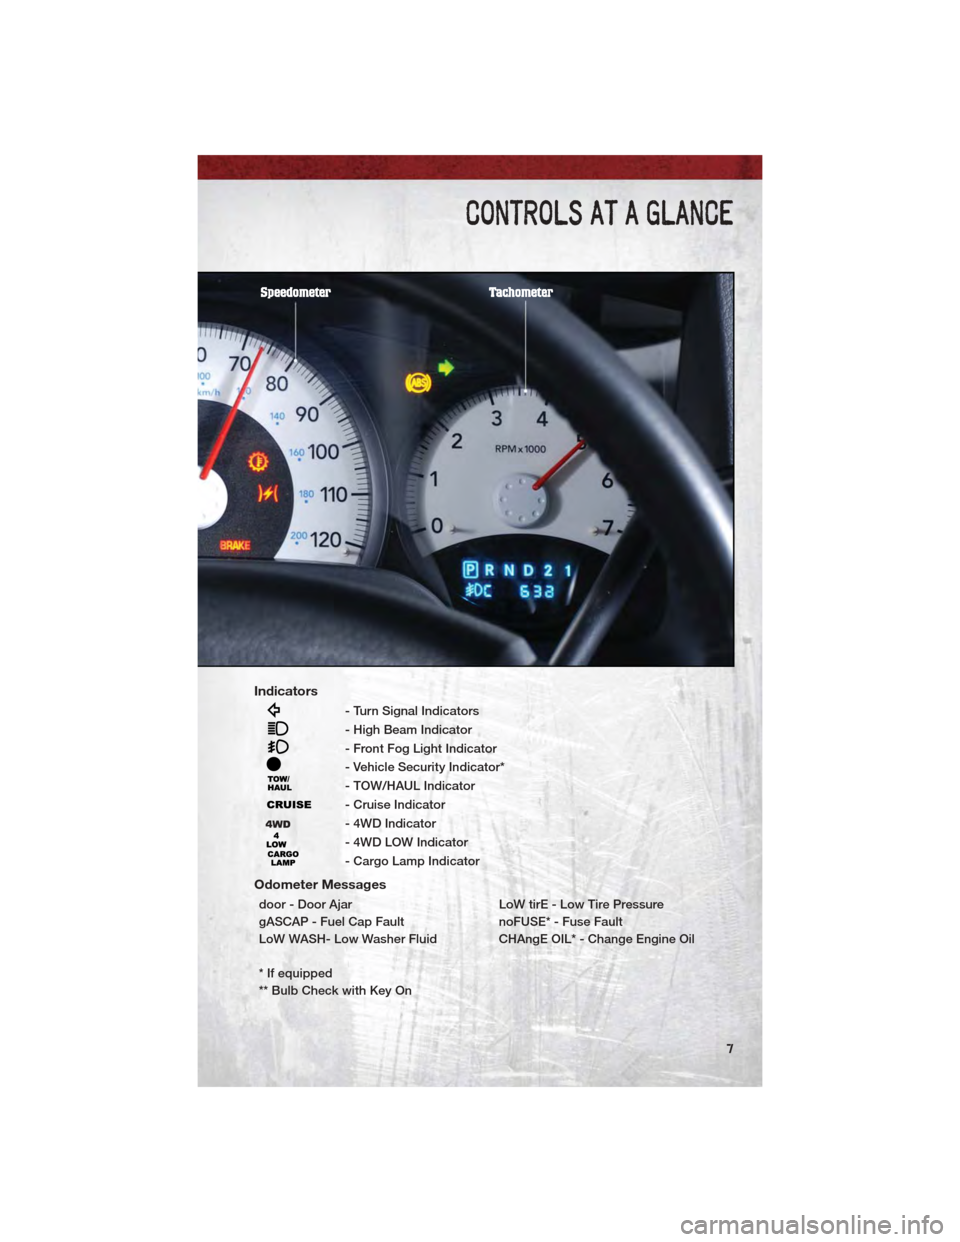 DODGE DAKOTA 2011 3.G User Guide Indicators
- Turn Signal Indicators
- High Beam Indicator
- Front Fog Light Indicator
- Vehicle Security Indicator*
- TOW/HAUL Indicator
- Cruise Indicator
- 4WD Indicator
- 4WD LOW Indicator
- Cargo 